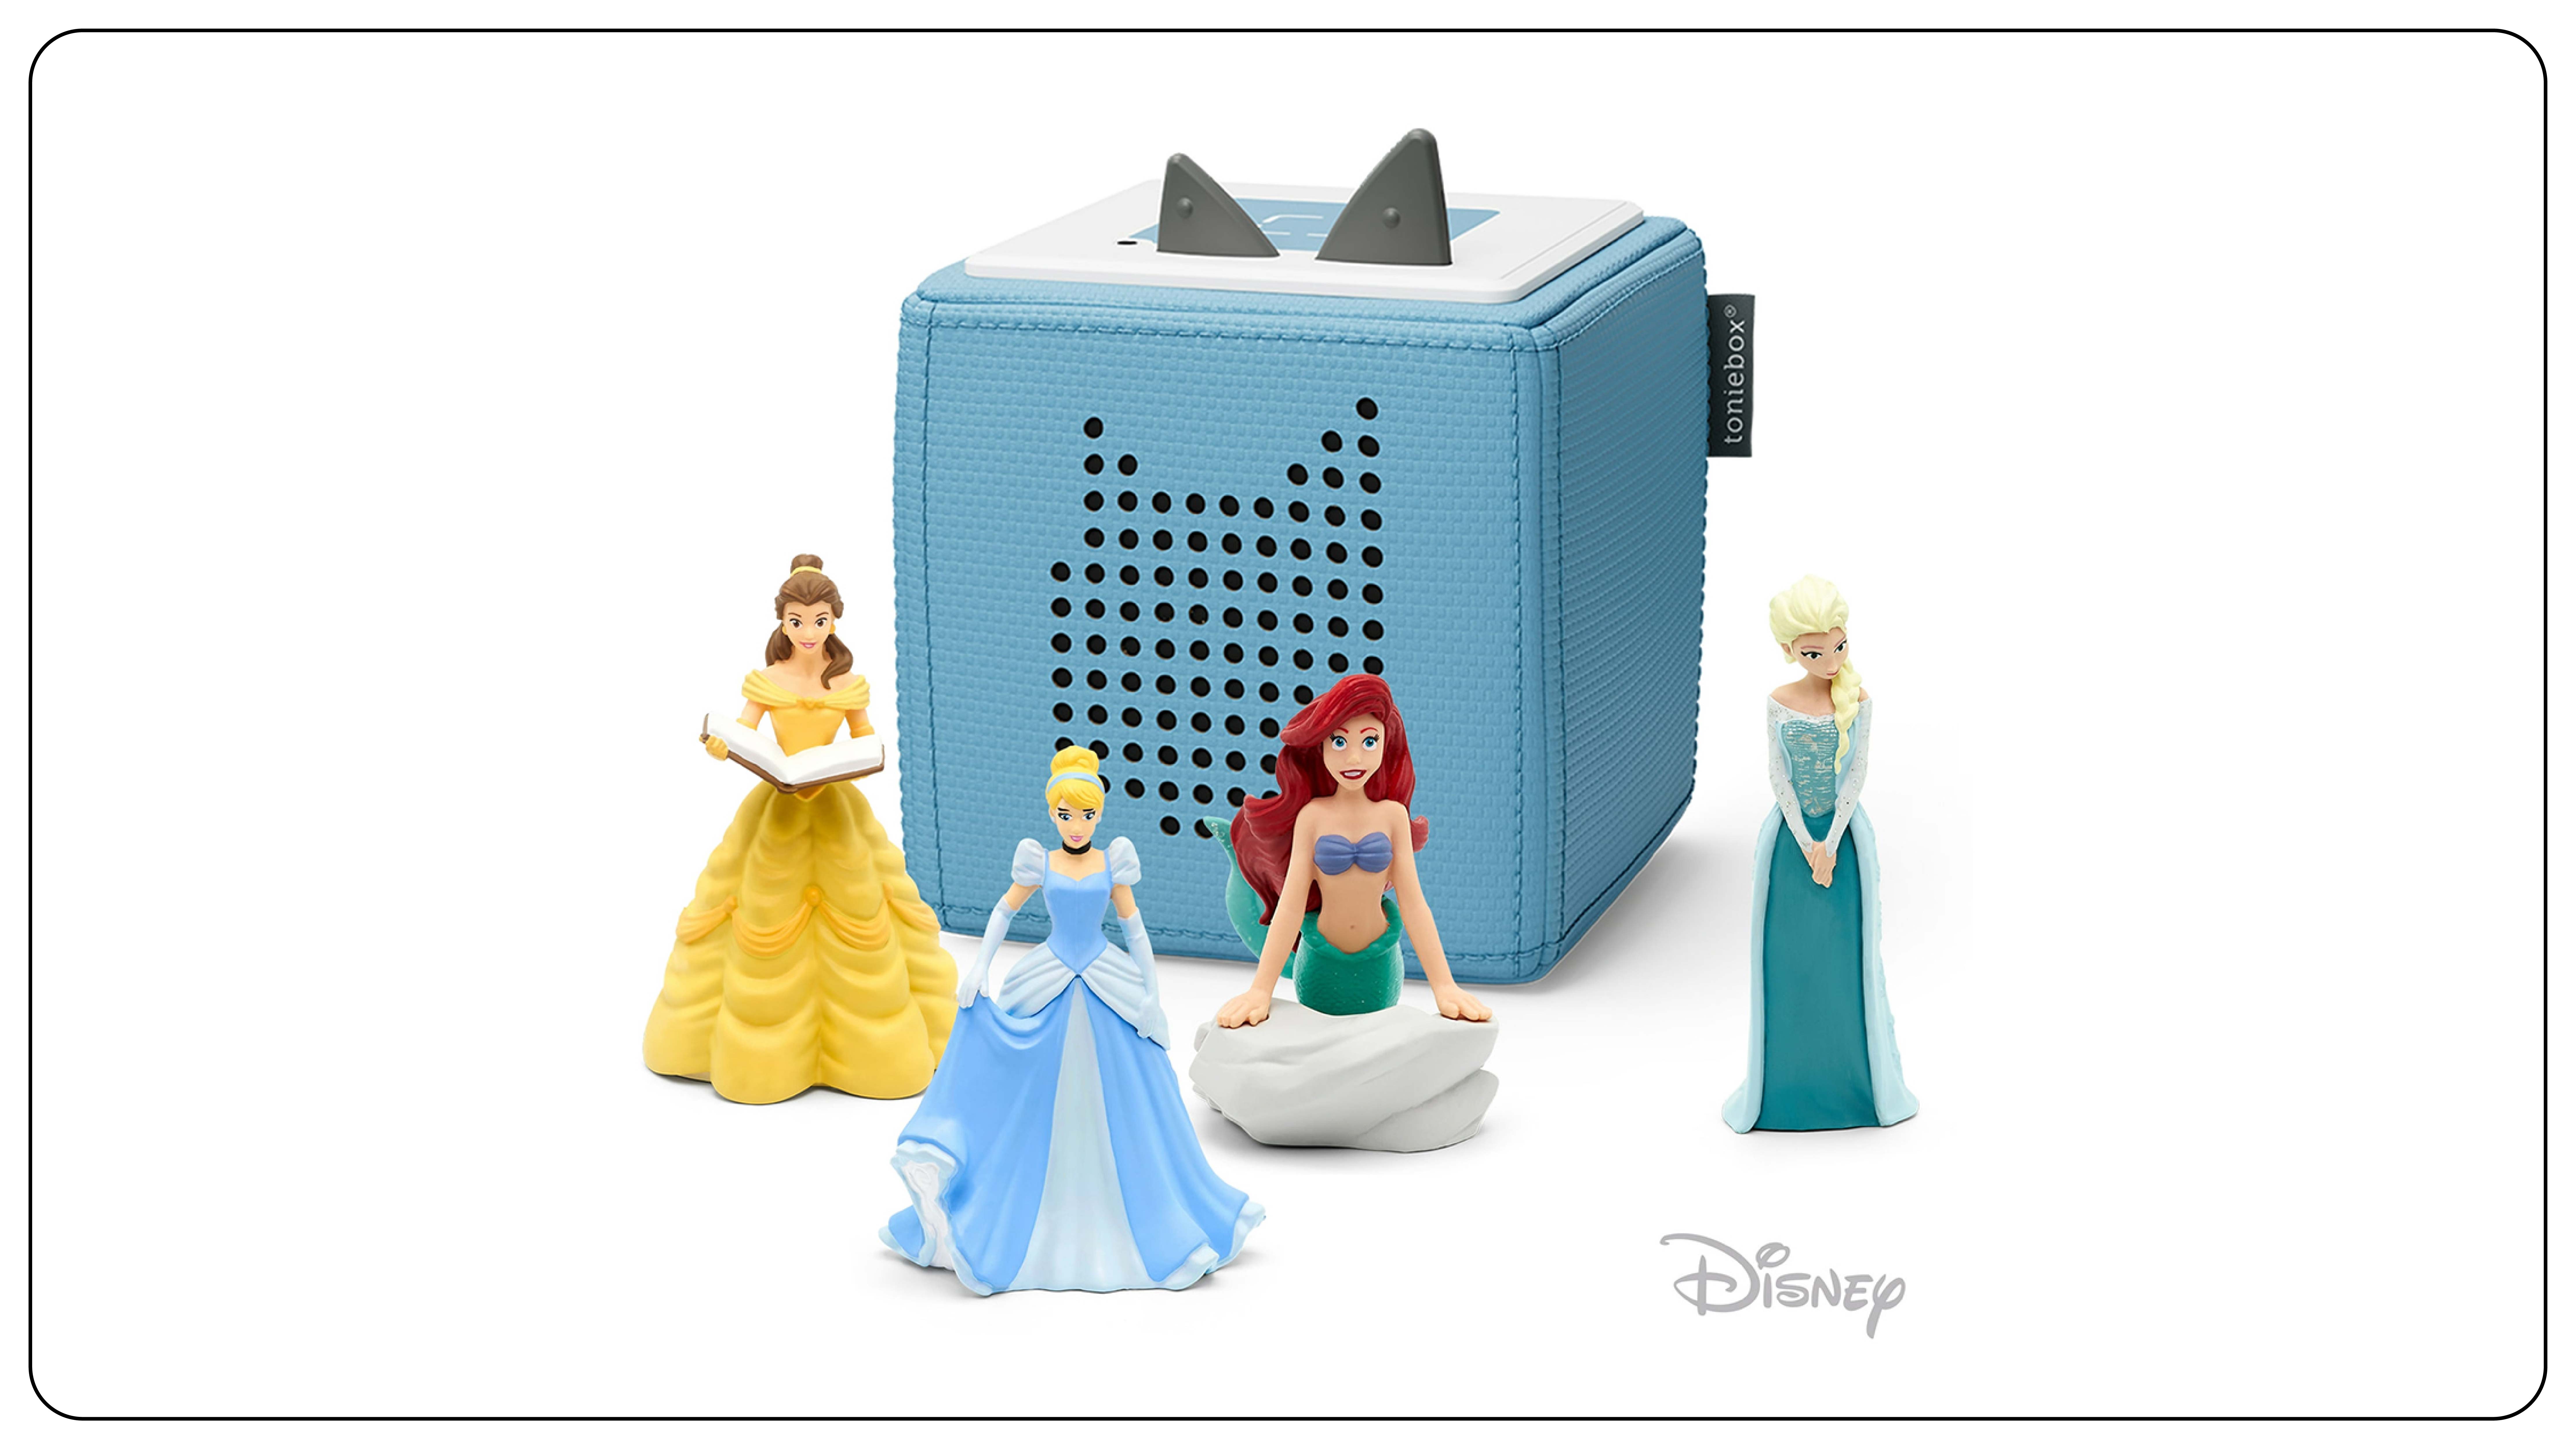 Toniebox with figures of Elsa, Ariel, Belle, and Cinderella